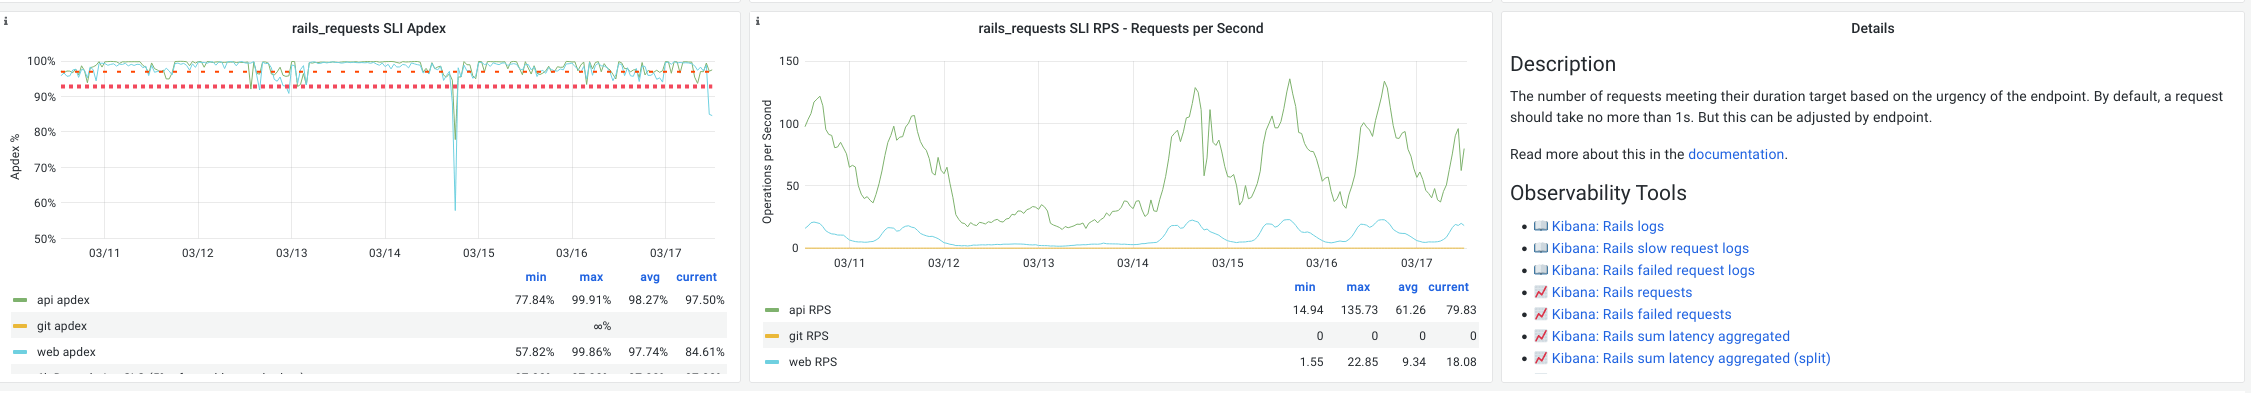 Rails requests service level indicator